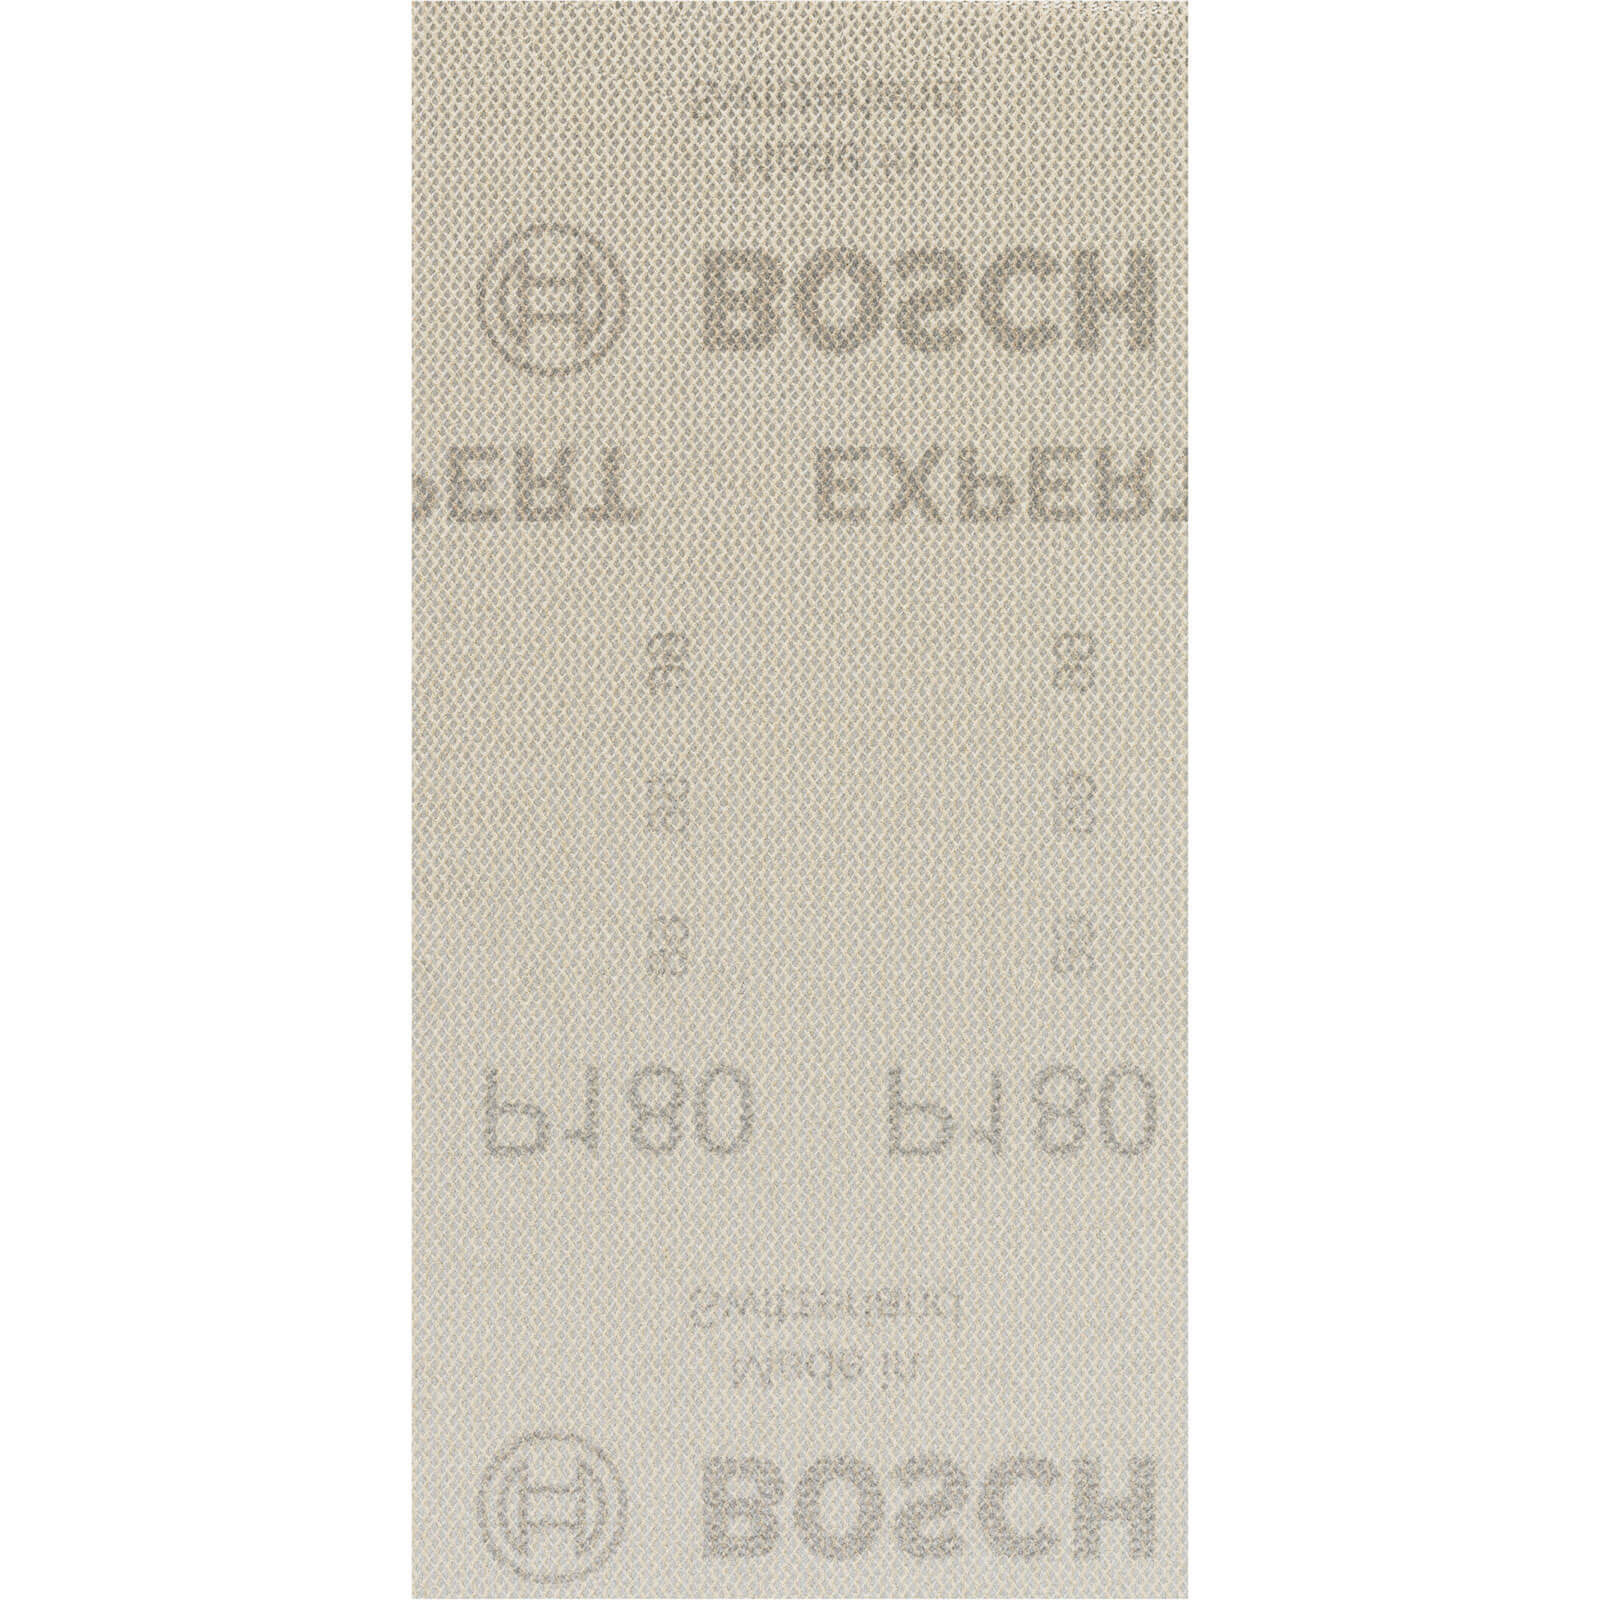 Image of Bosch Expert M480 93mm x 186mm Net Abrasive Sanding Sheets 93mm x 186mm 180g Pack of 50